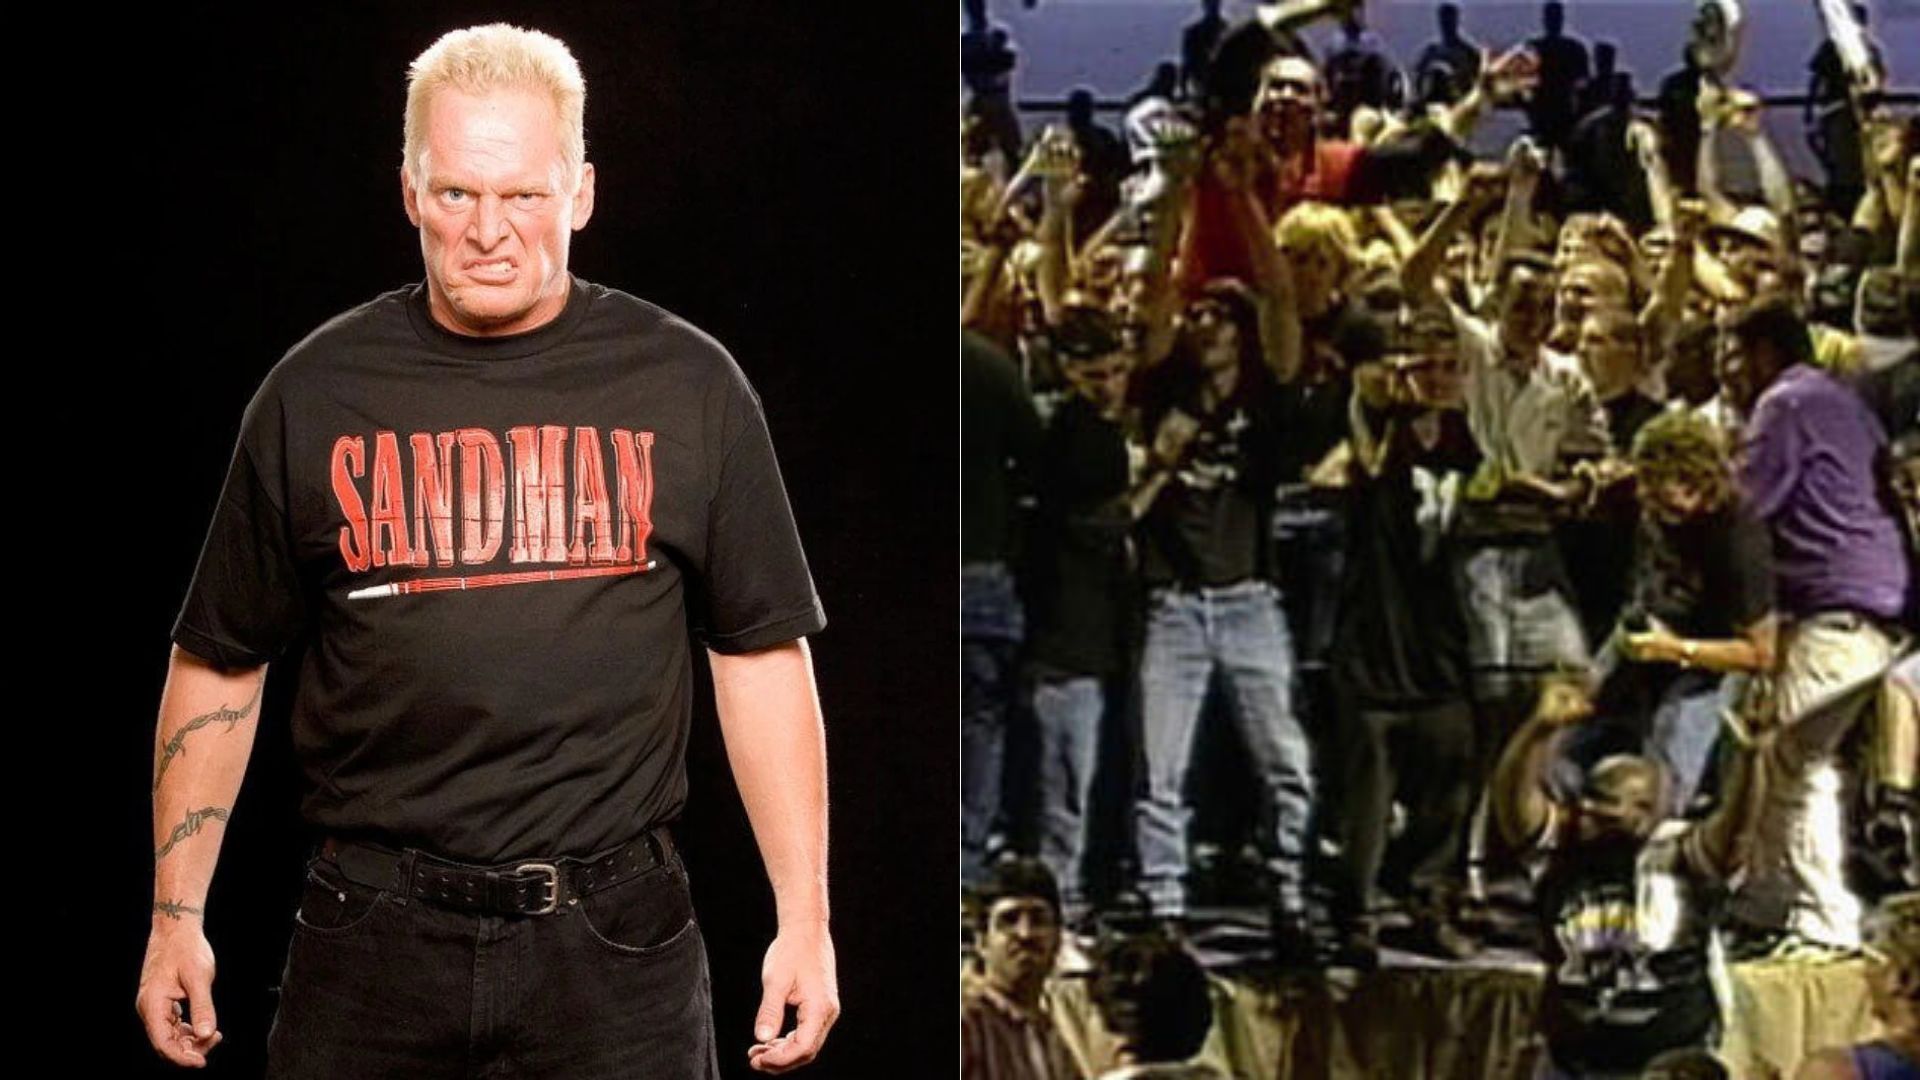 Five-time ECW World Heavyweight Champion The Sandman